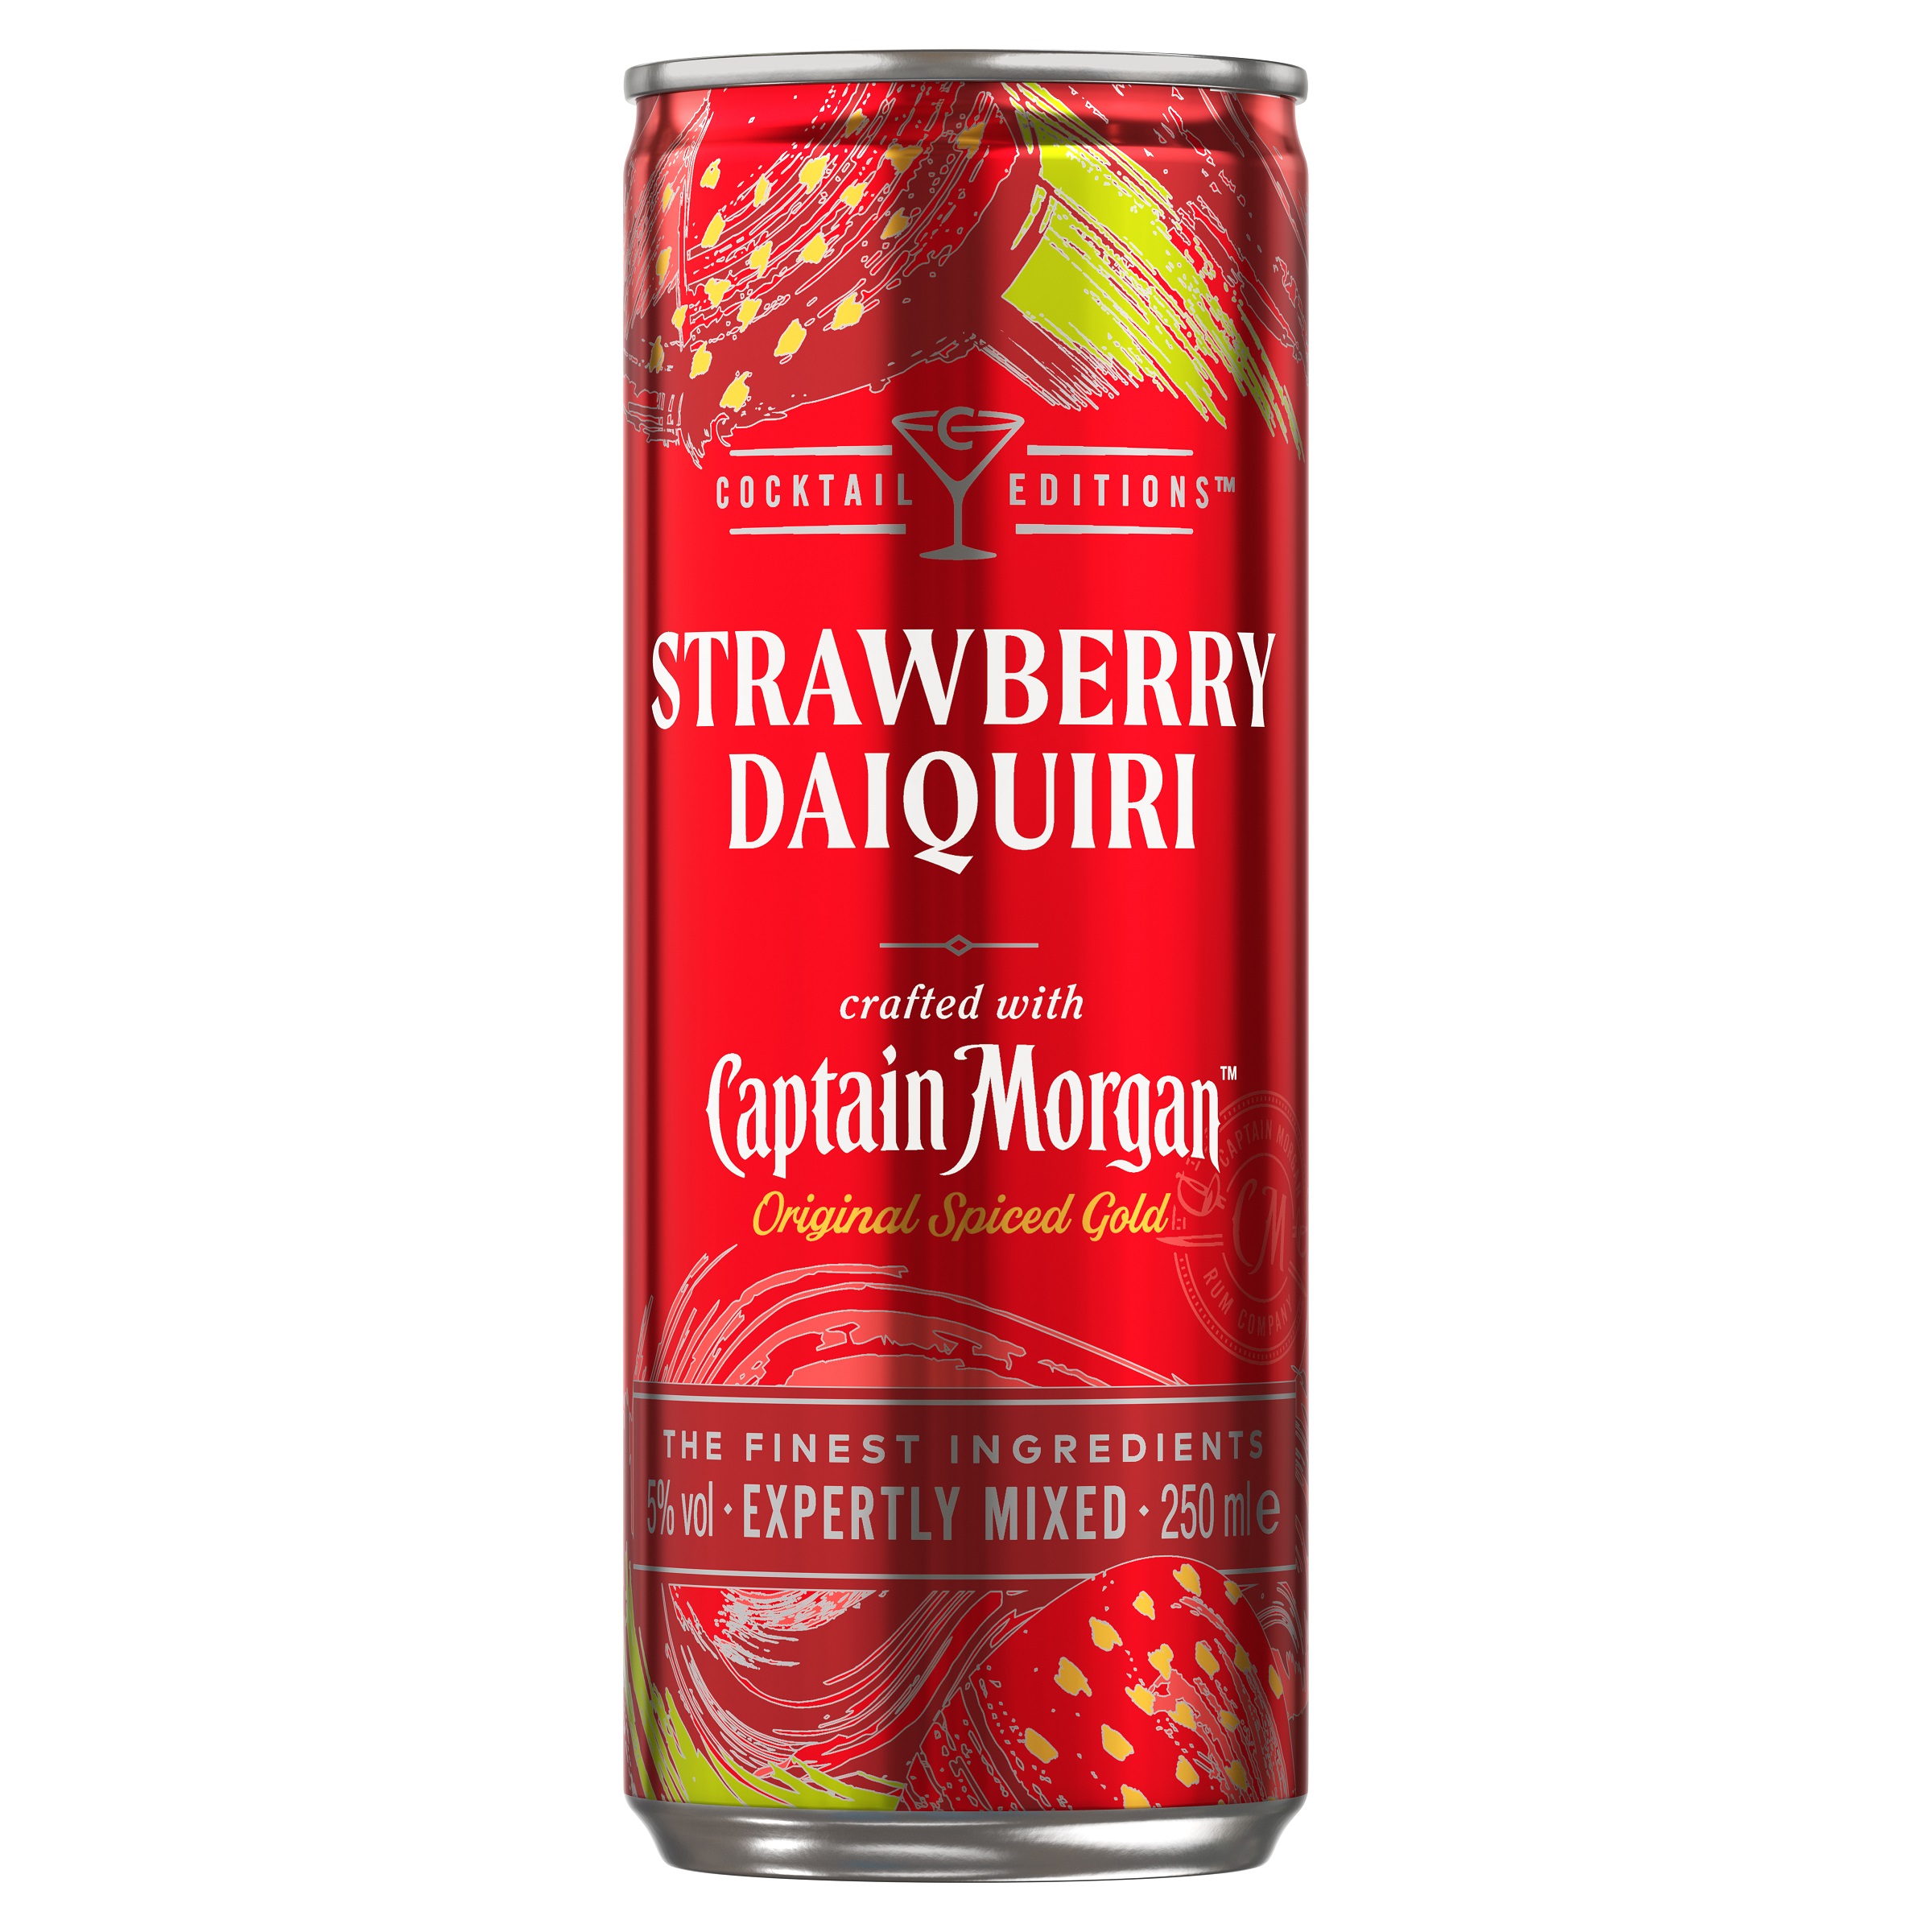 Captain Morgan launches Strawberry Daiquiri cocktail pre-mix can